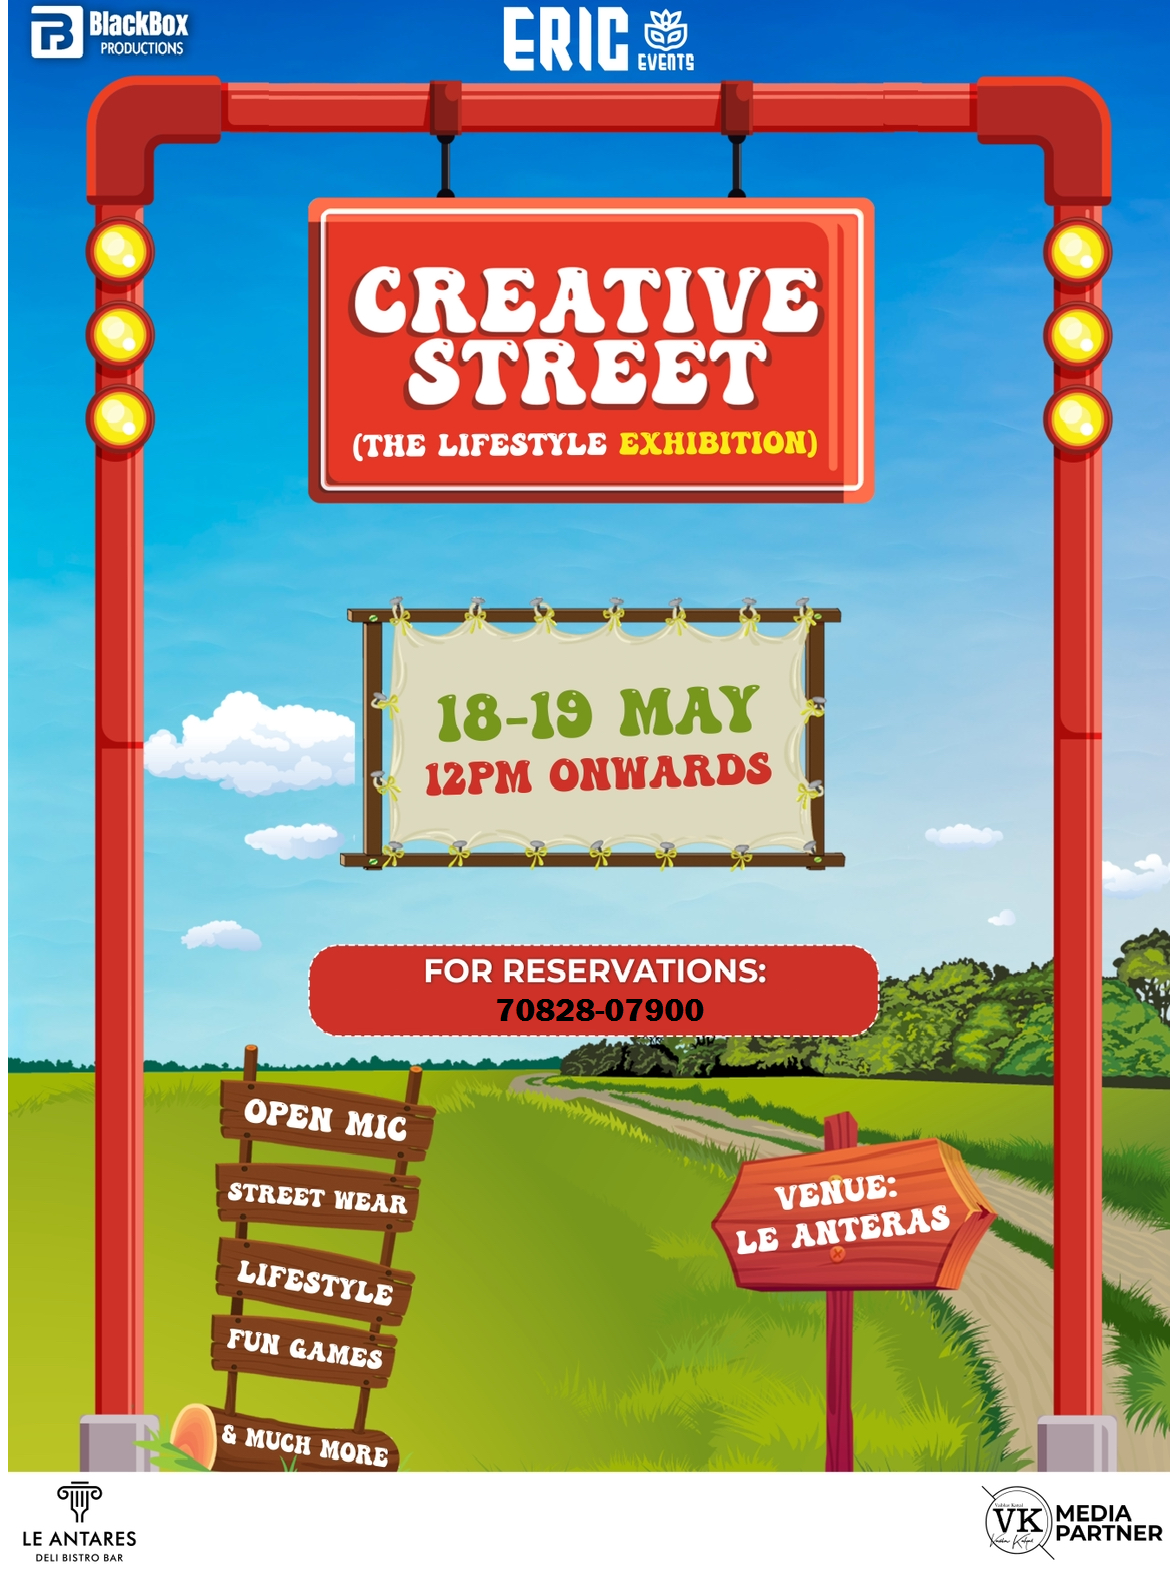 Creative street - The Lifestyle Exhibition